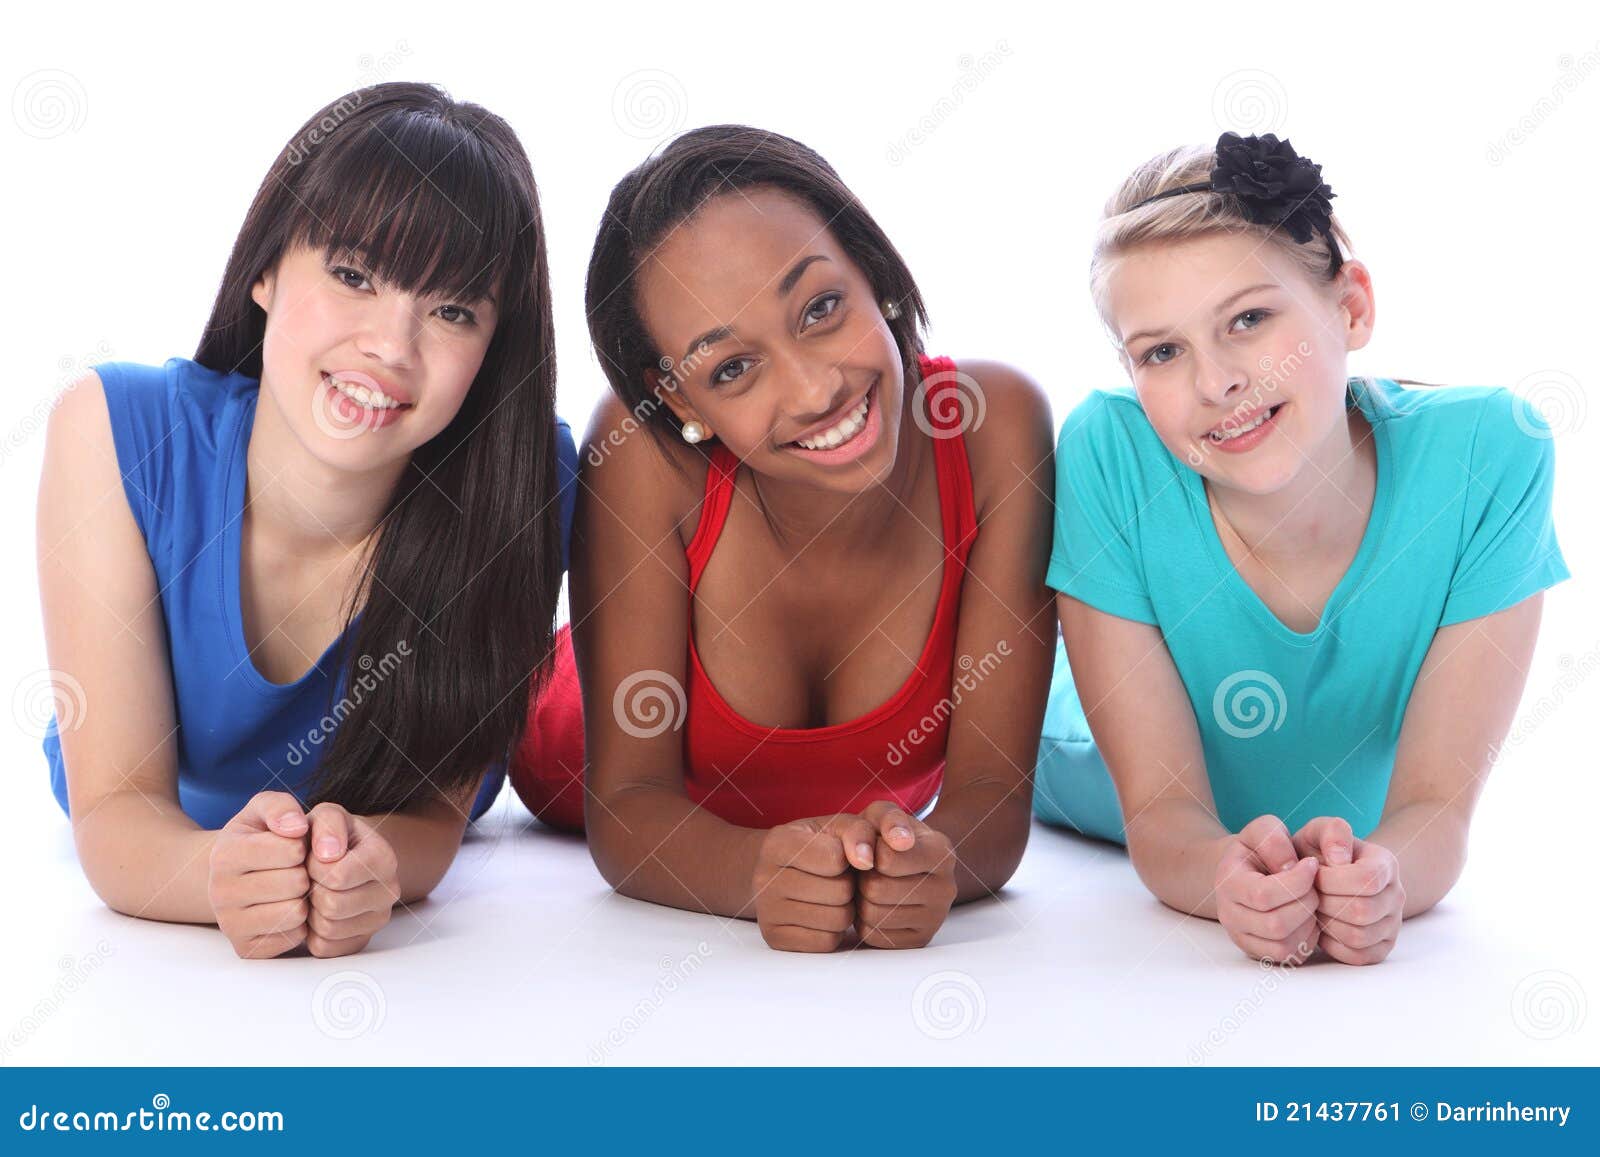 Black White And Asian Girl Friends Lying On Floor Stock Image Image